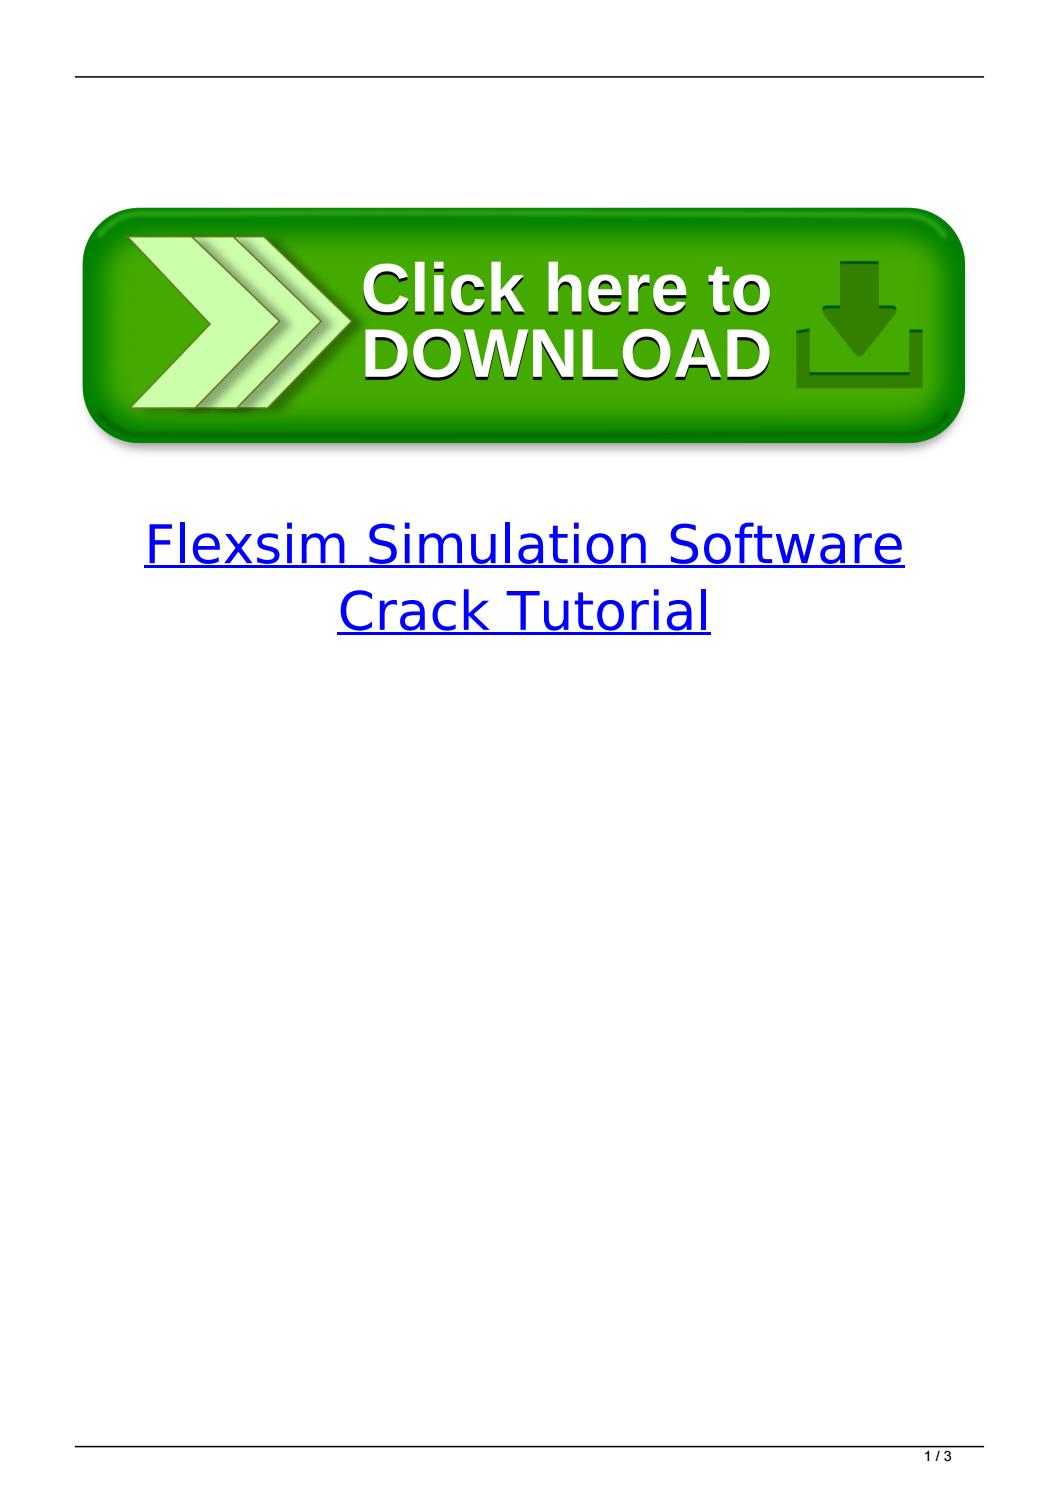 Flexsim software products inc company